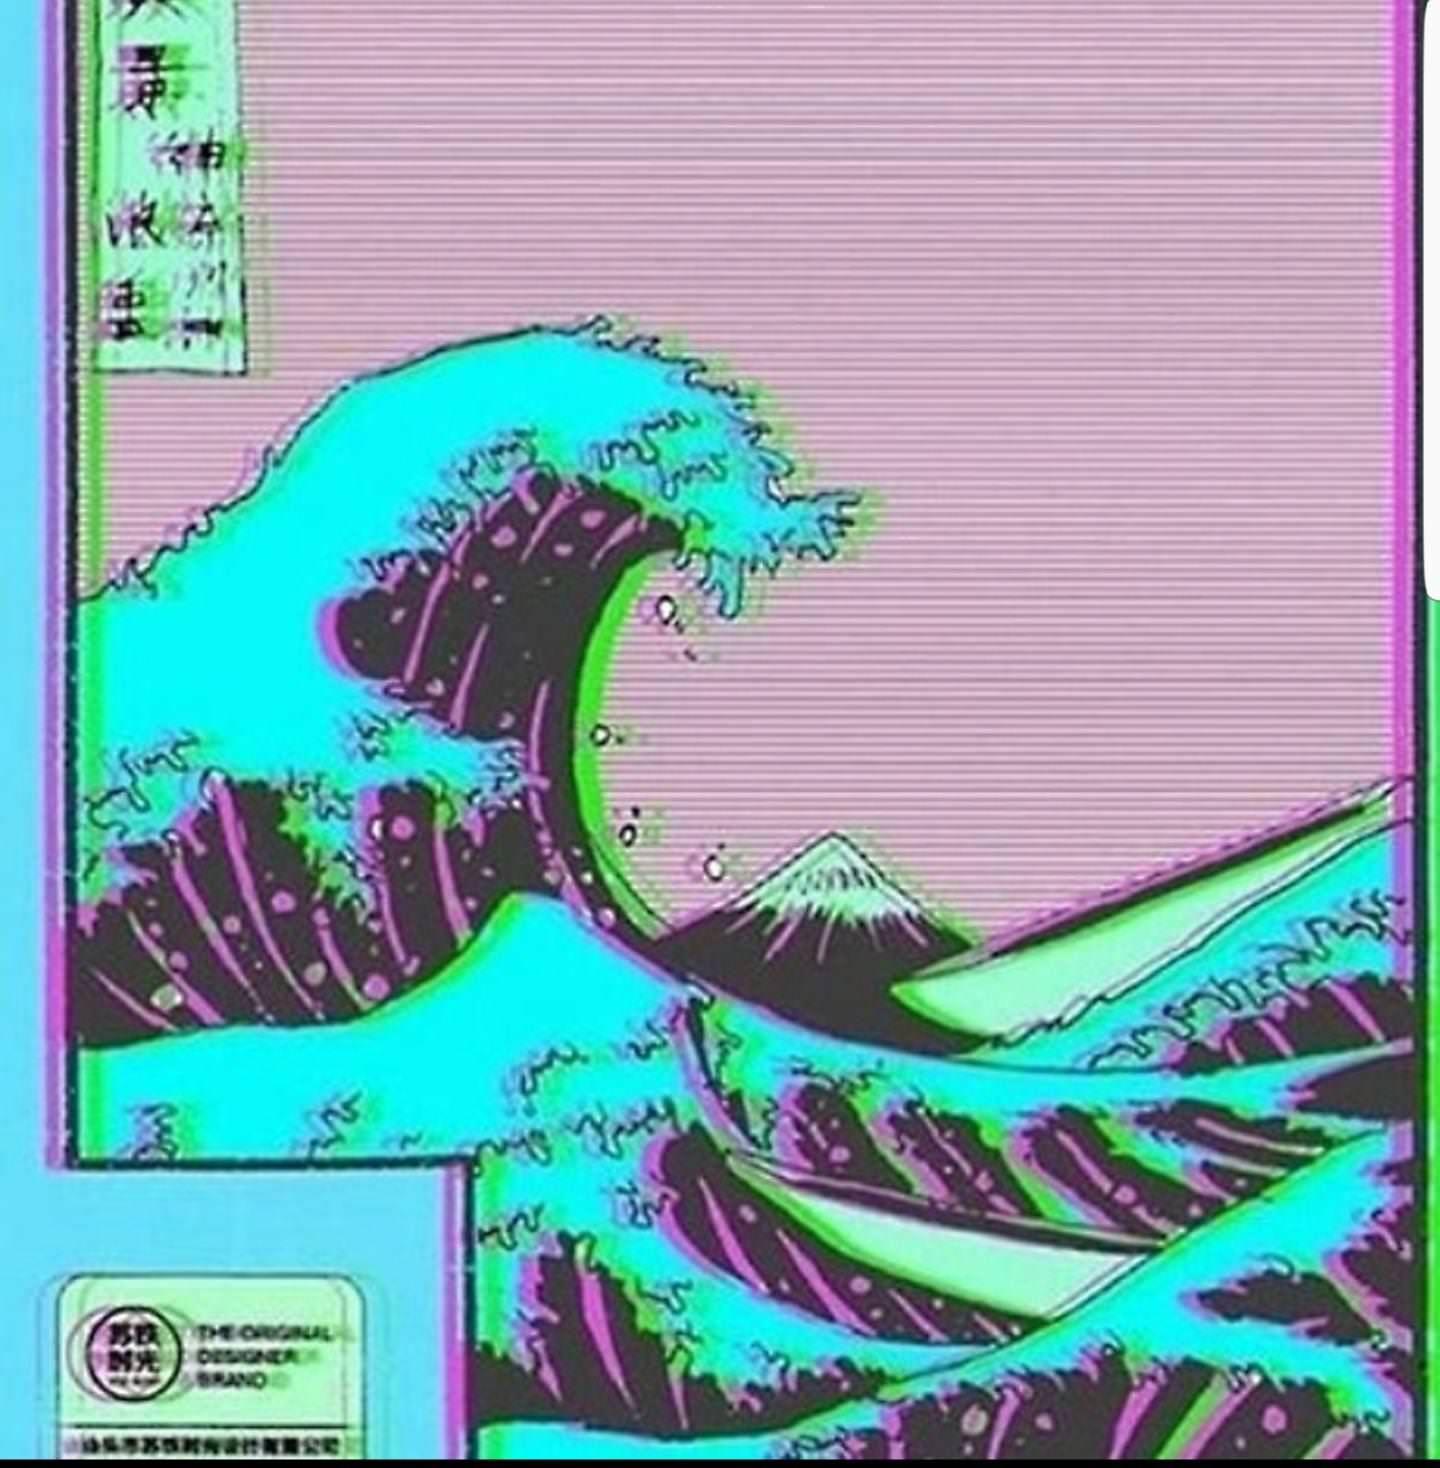 The Great Wave off Kanagawa. Vaporwave wallpaper, Vaporwave art, Vaporwave